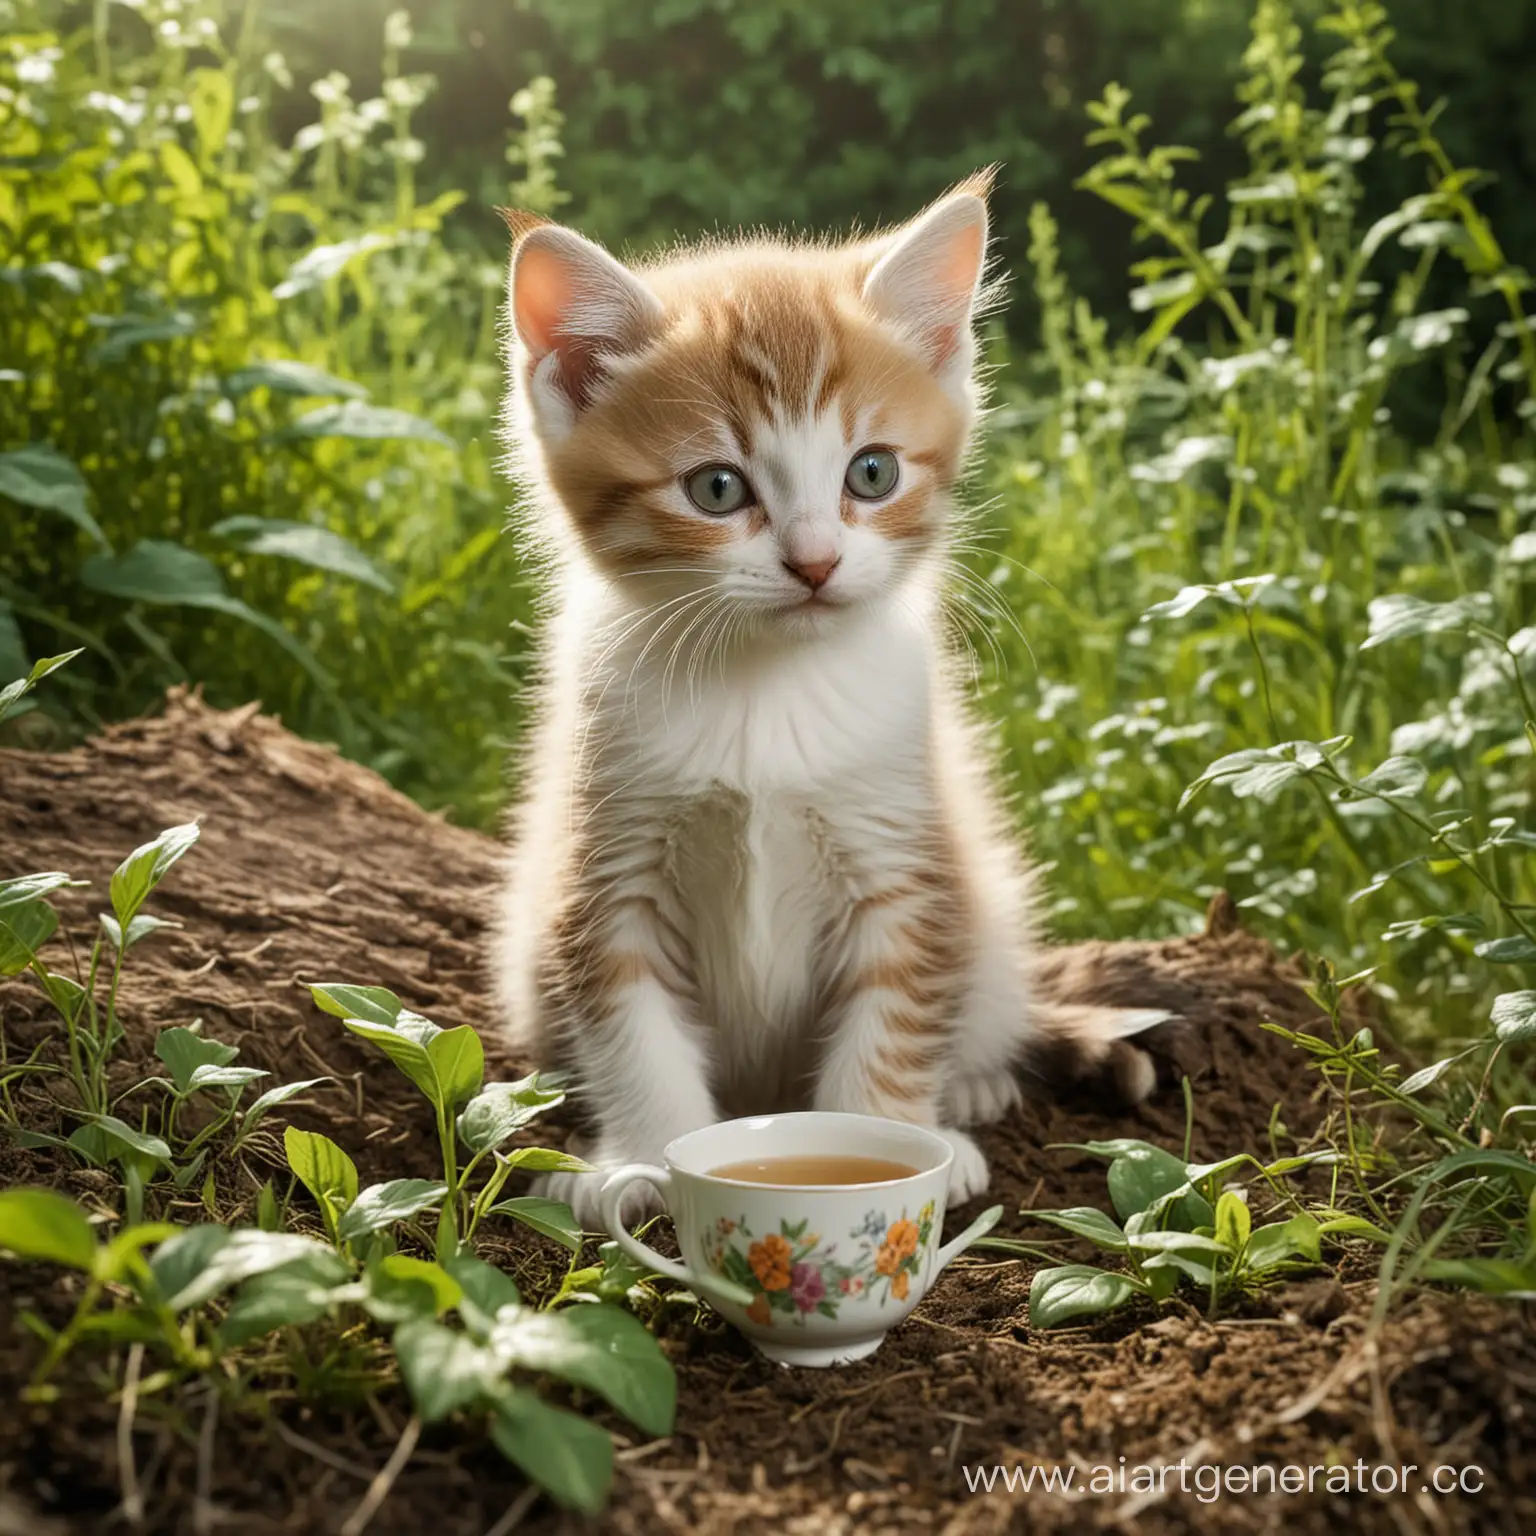 Kitten-Enjoying-Afternoon-Tea-in-the-Peaceful-Glade